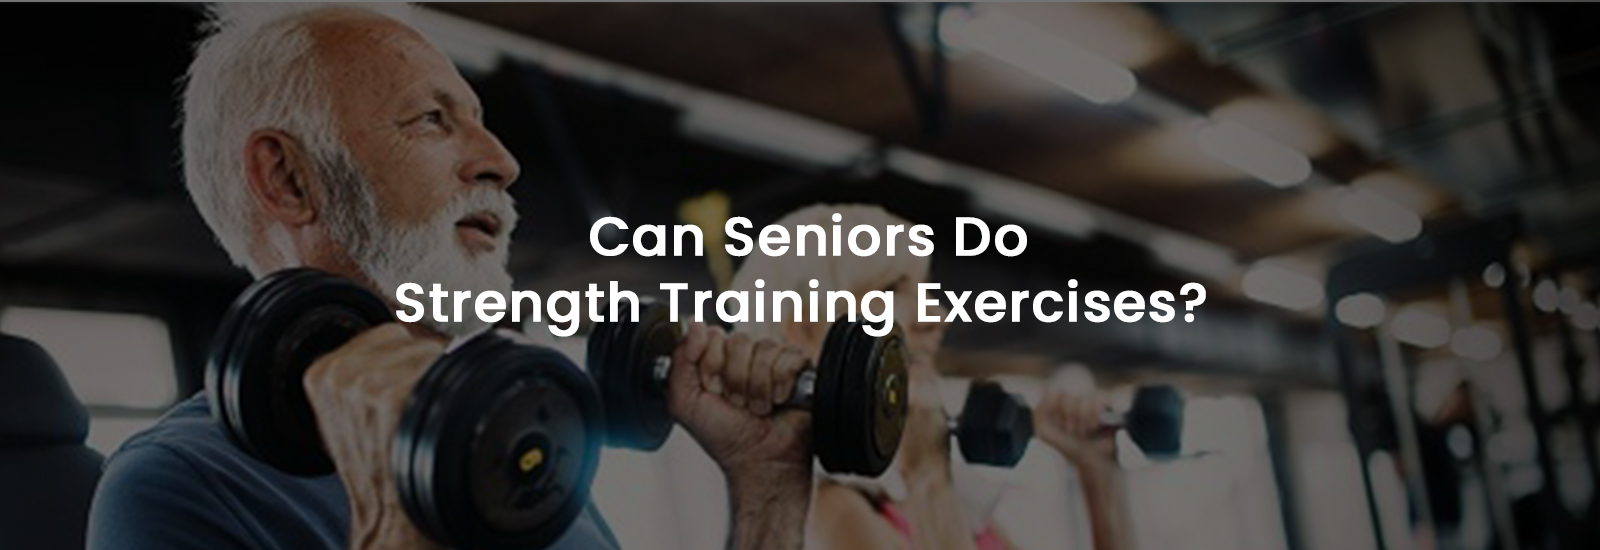 Can Seniors Do Strength Training Exercises? | Banner Image